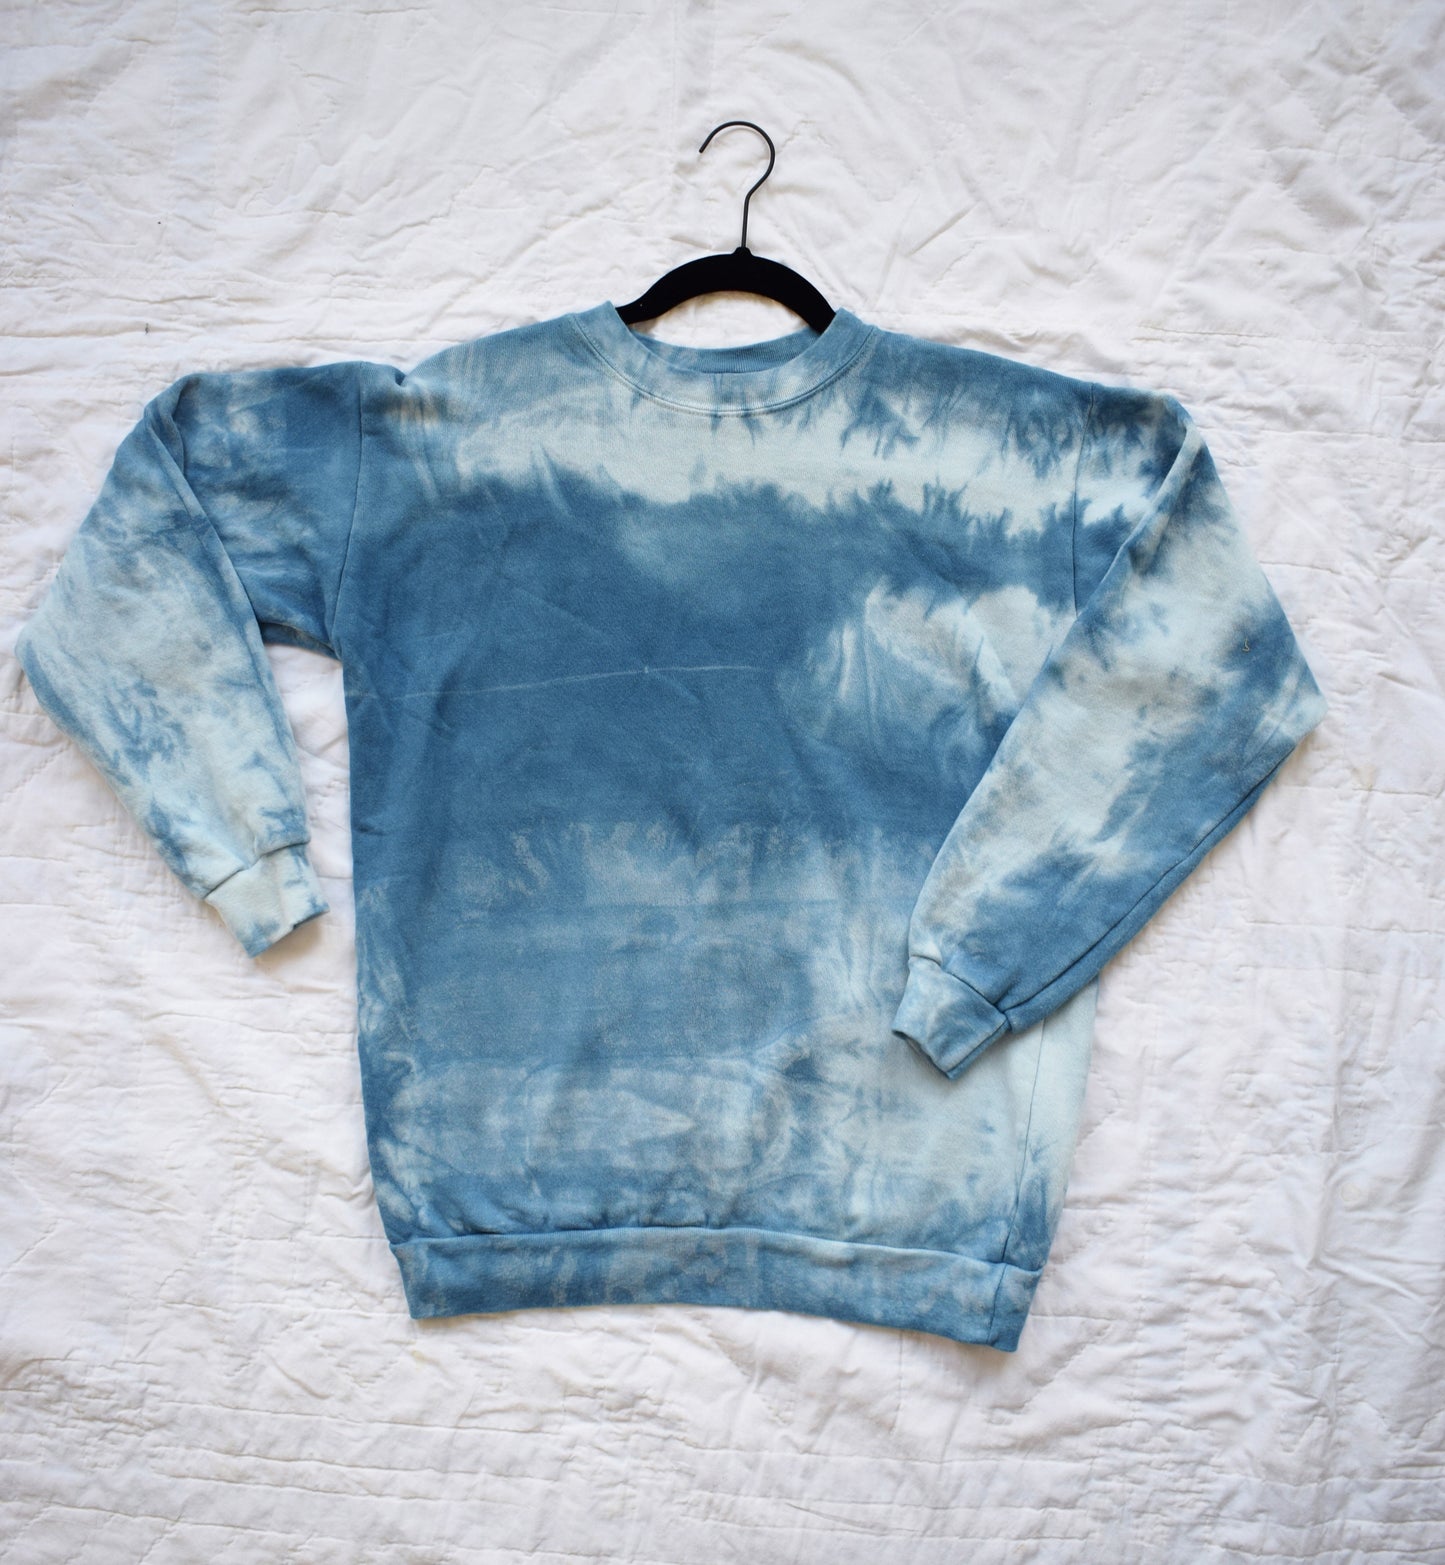 Indigo Dyed Sweatshirt, Window Pane Series 1